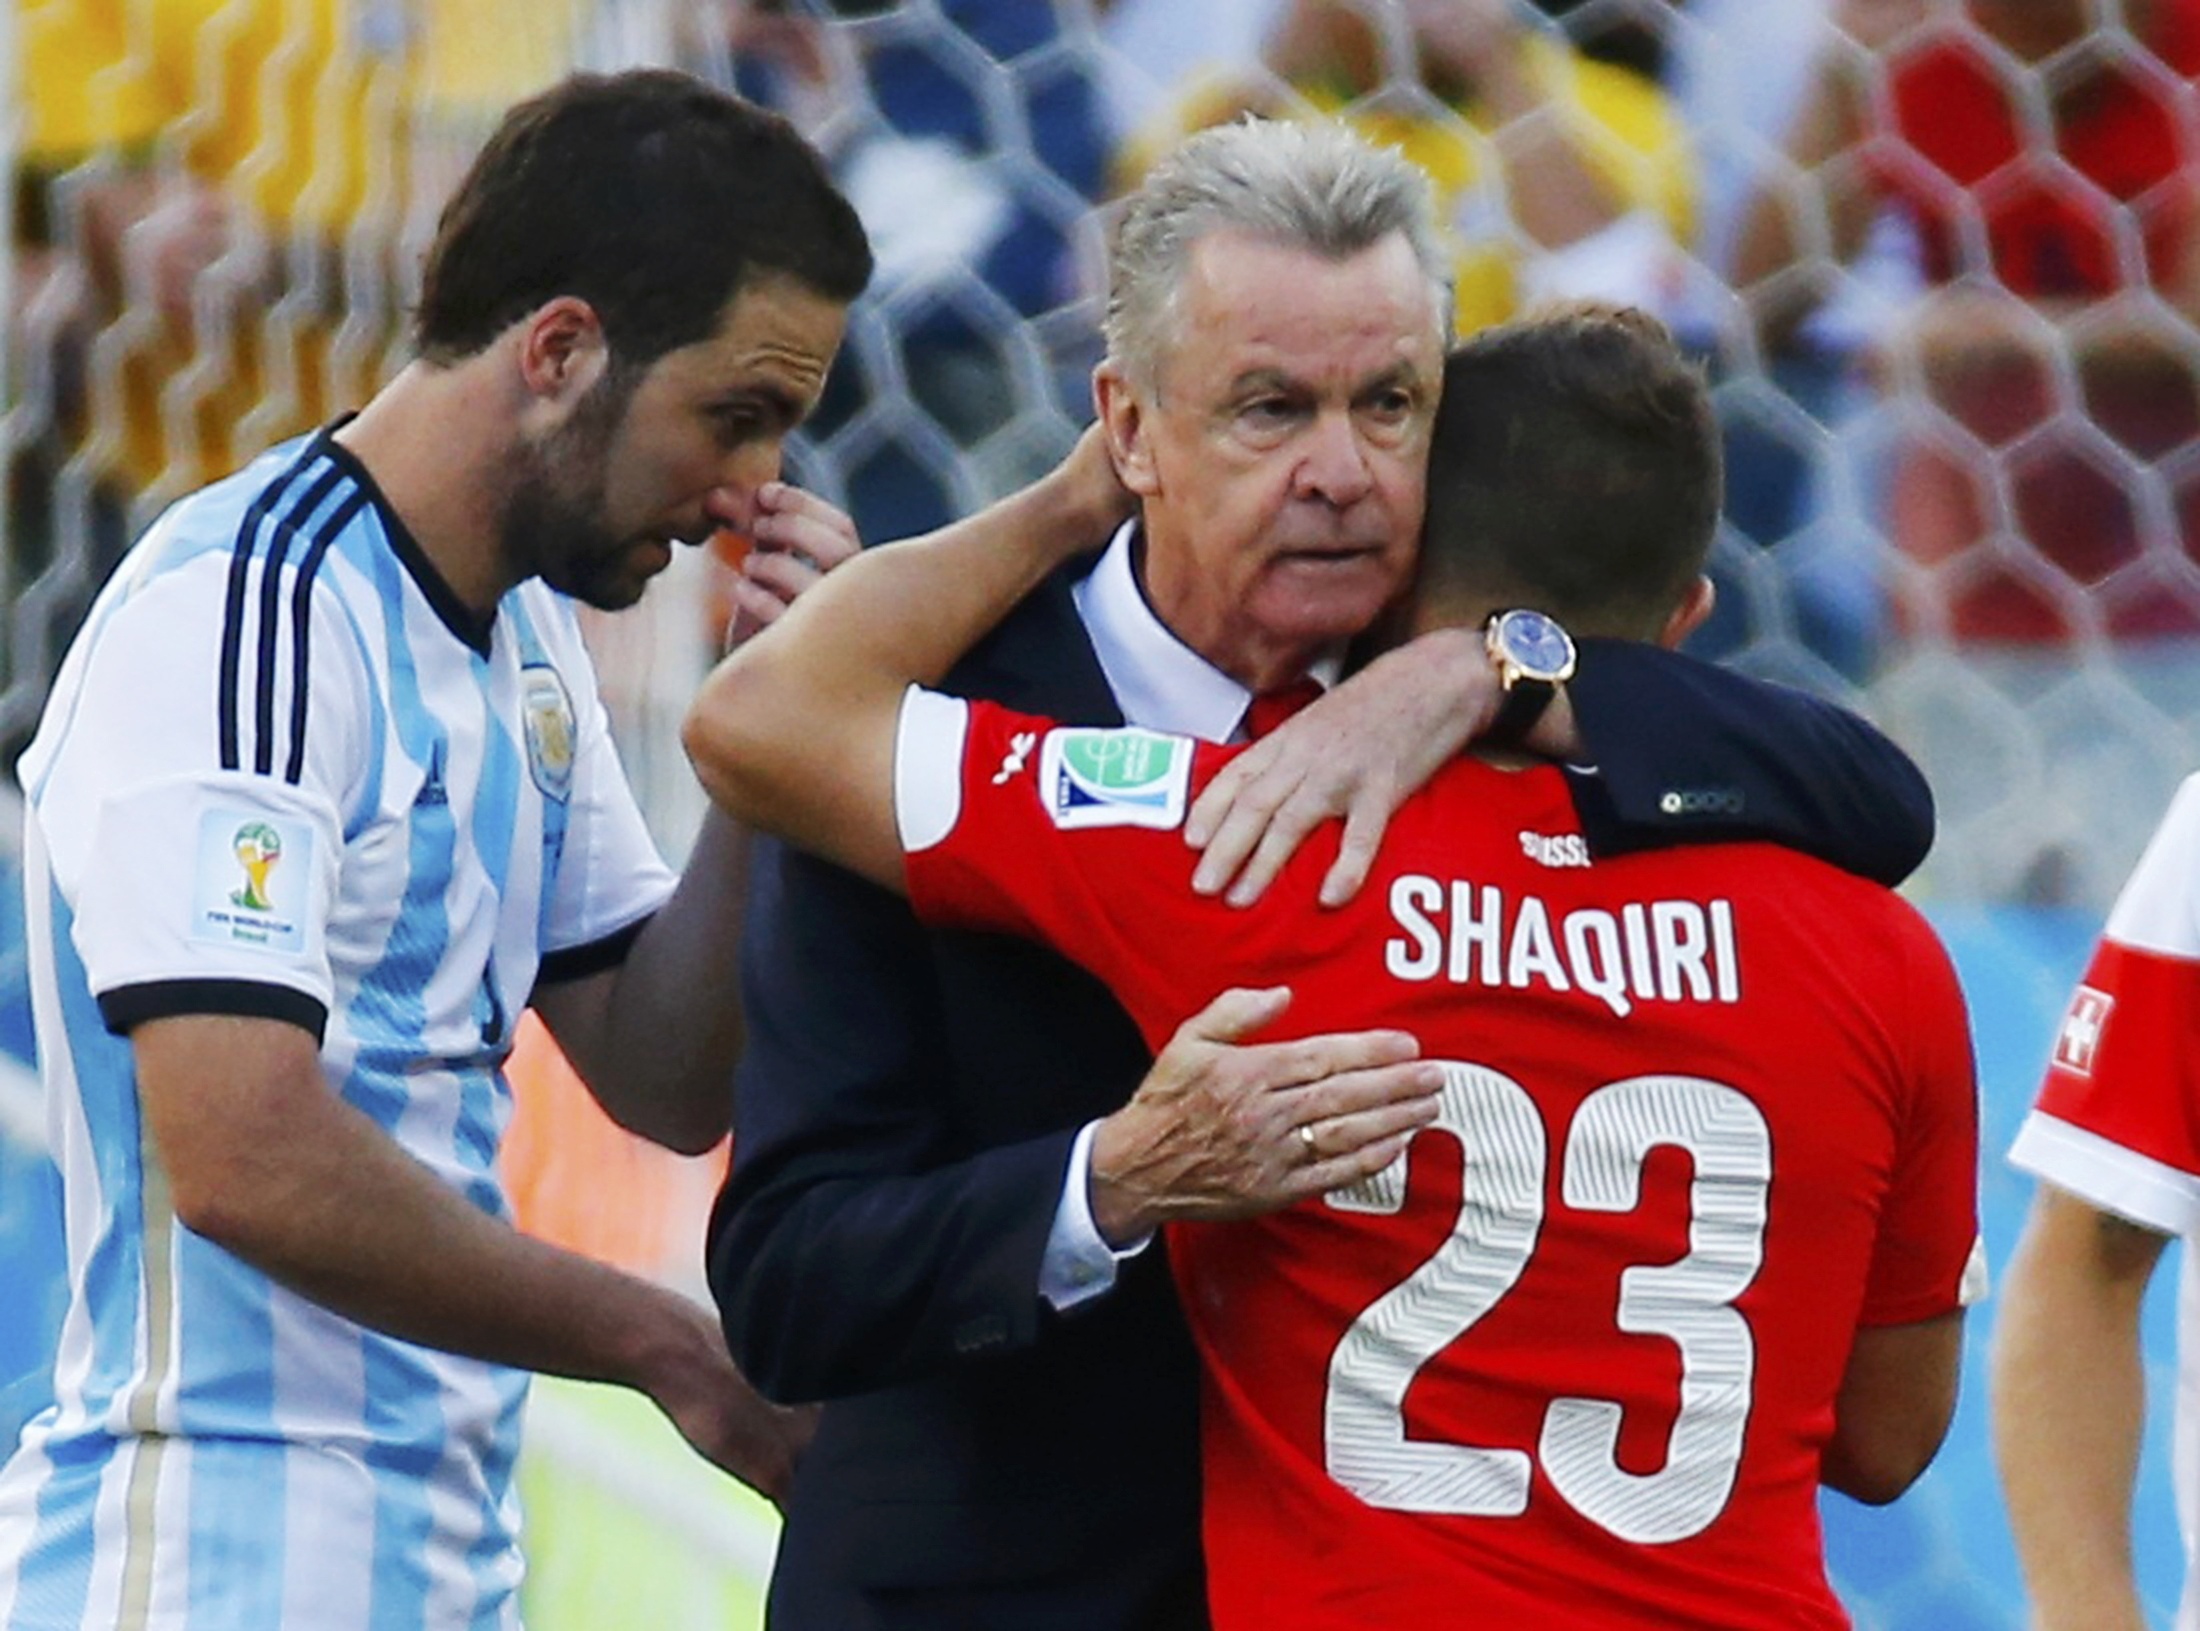 Der Trainer als Tröster: Ottmar Hitzfeld nach dem WM-Aus mit Xherdan Shaqiri im Arm. (Bild: Reuters)